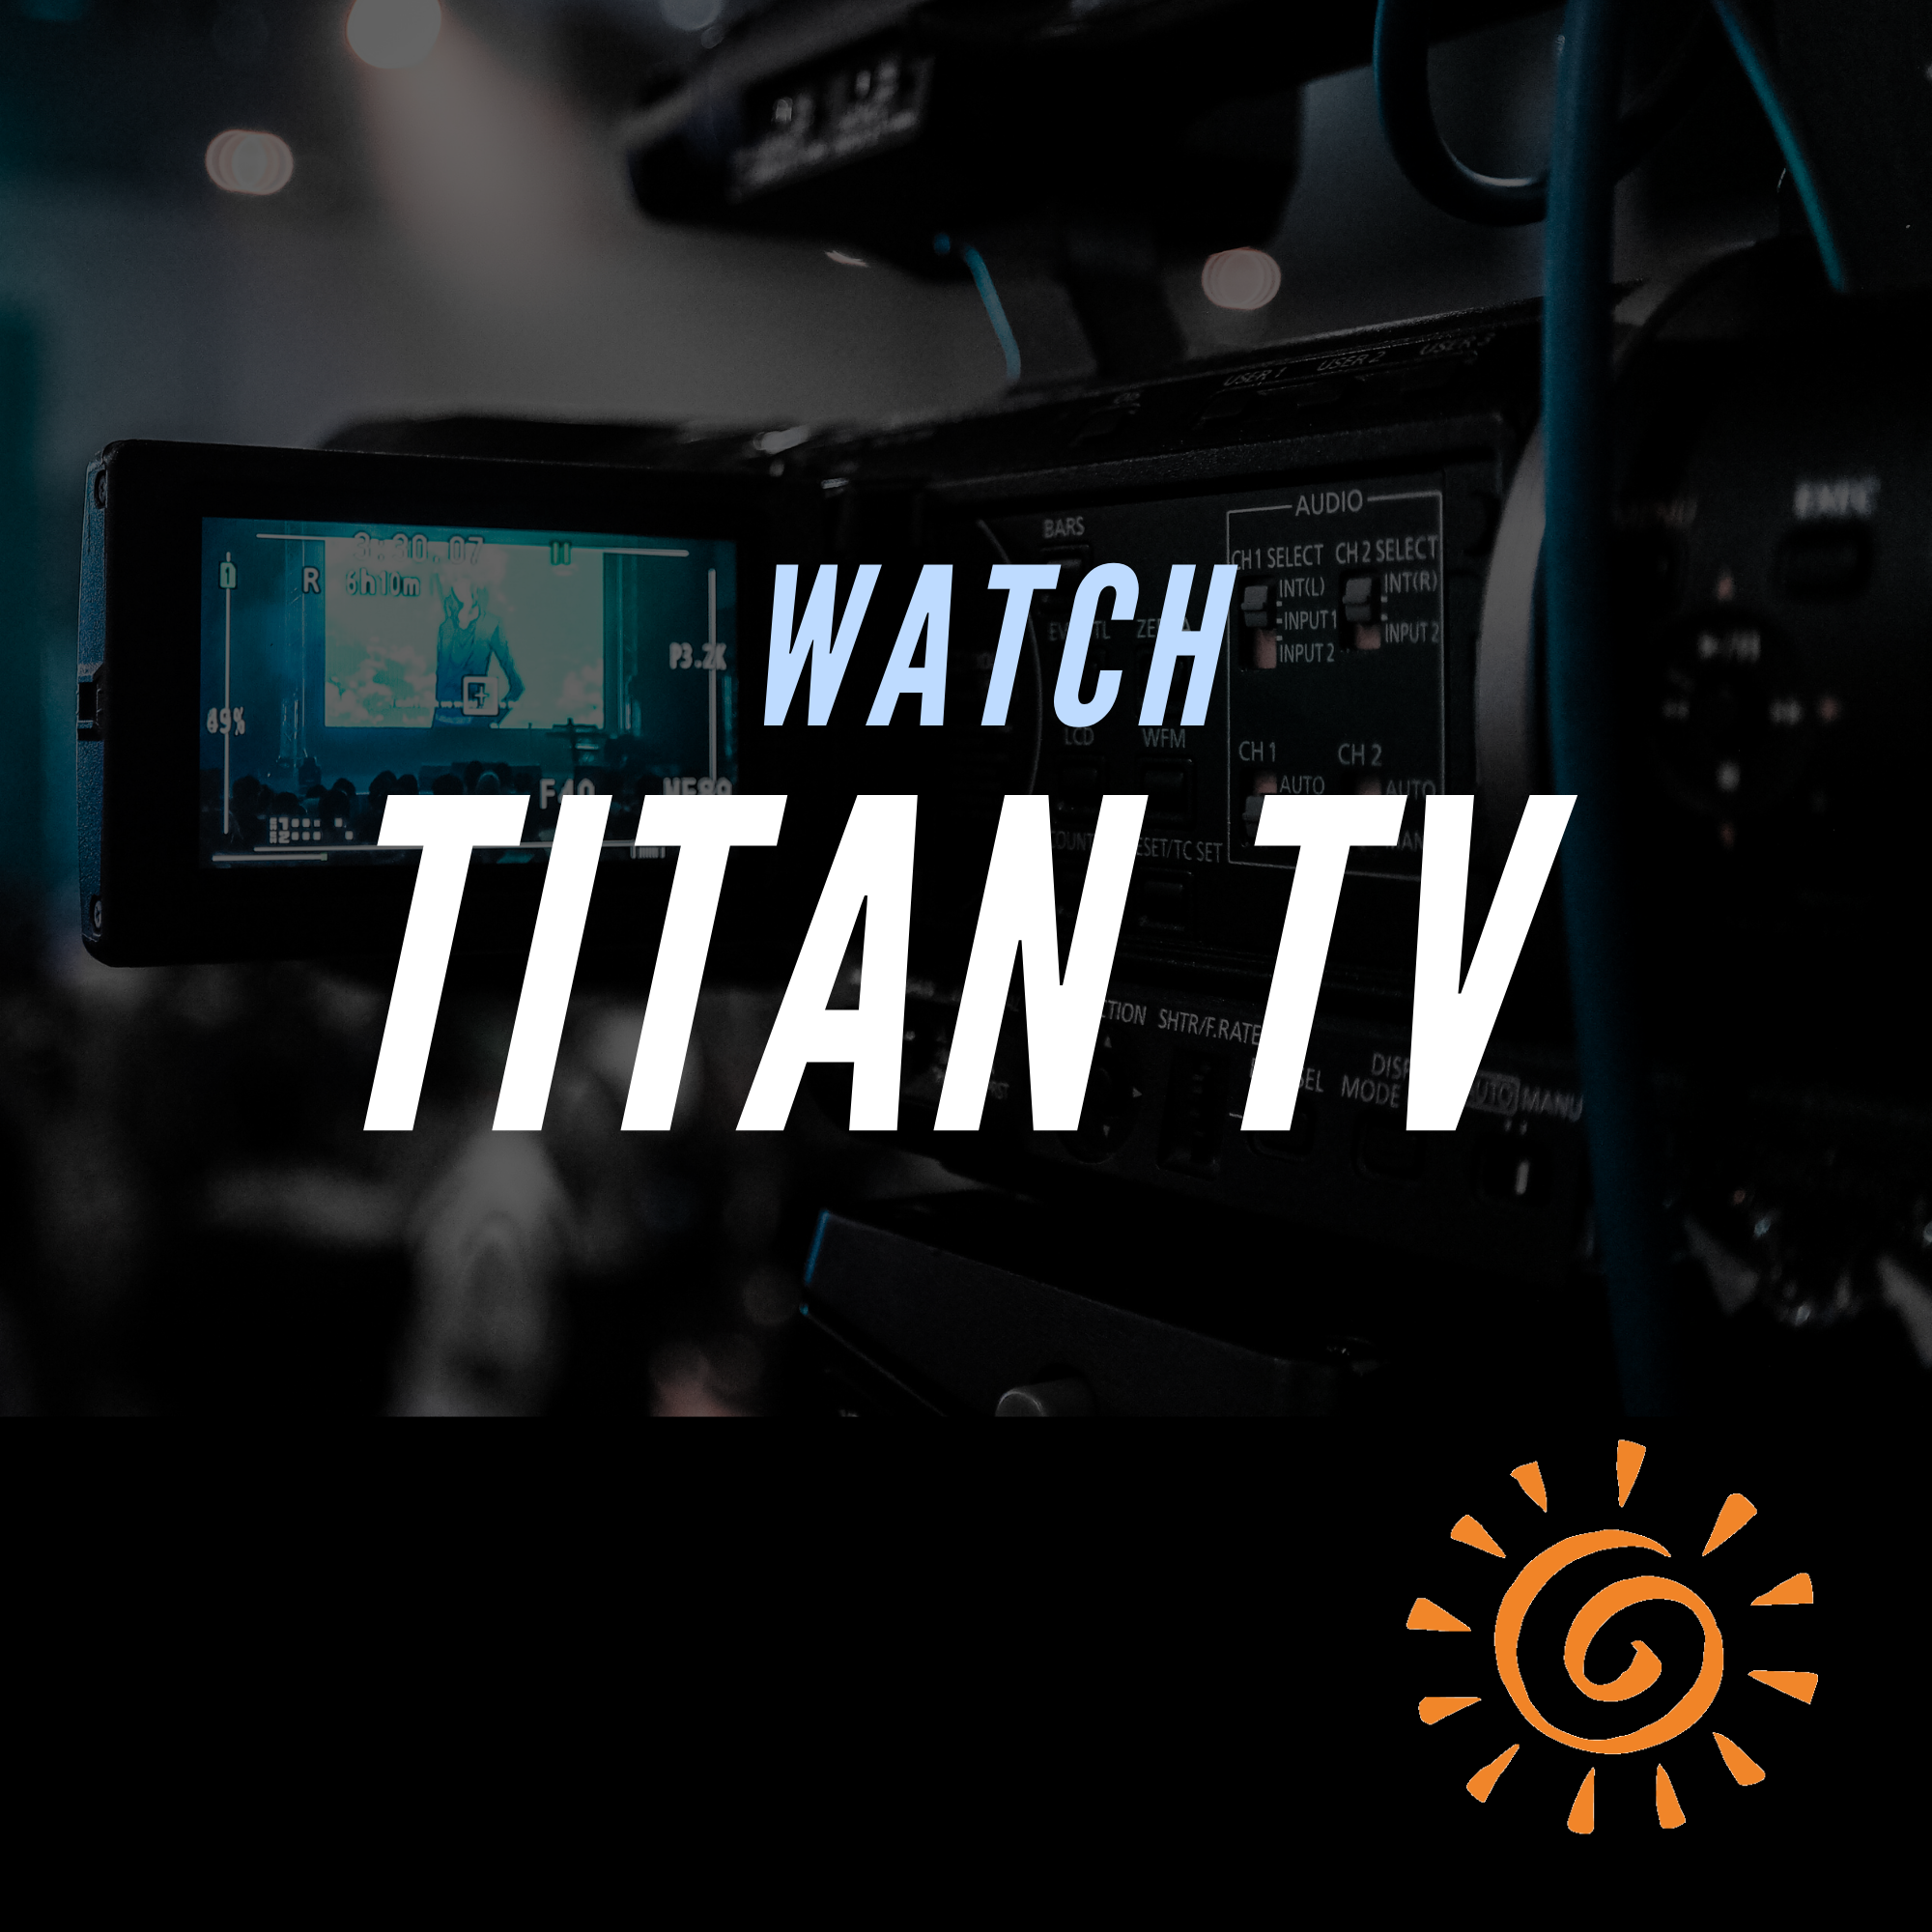 Titan TV Logo